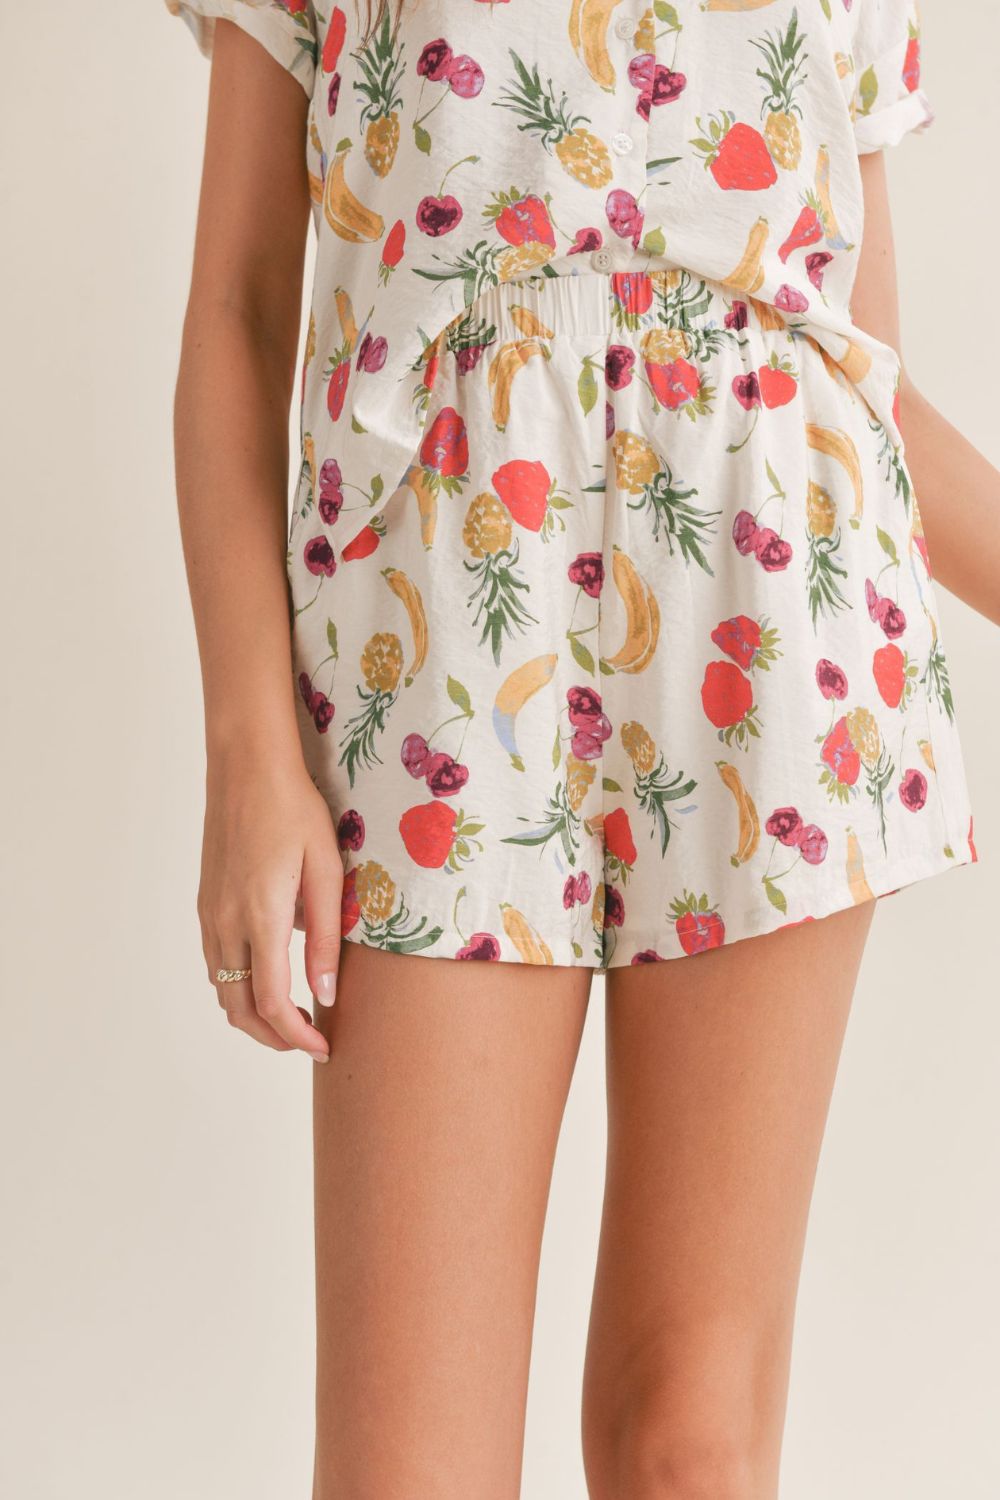 Women's Fruit Print Spring Summer Shorts | White Multi - Women's Shorts - Blooming Daily